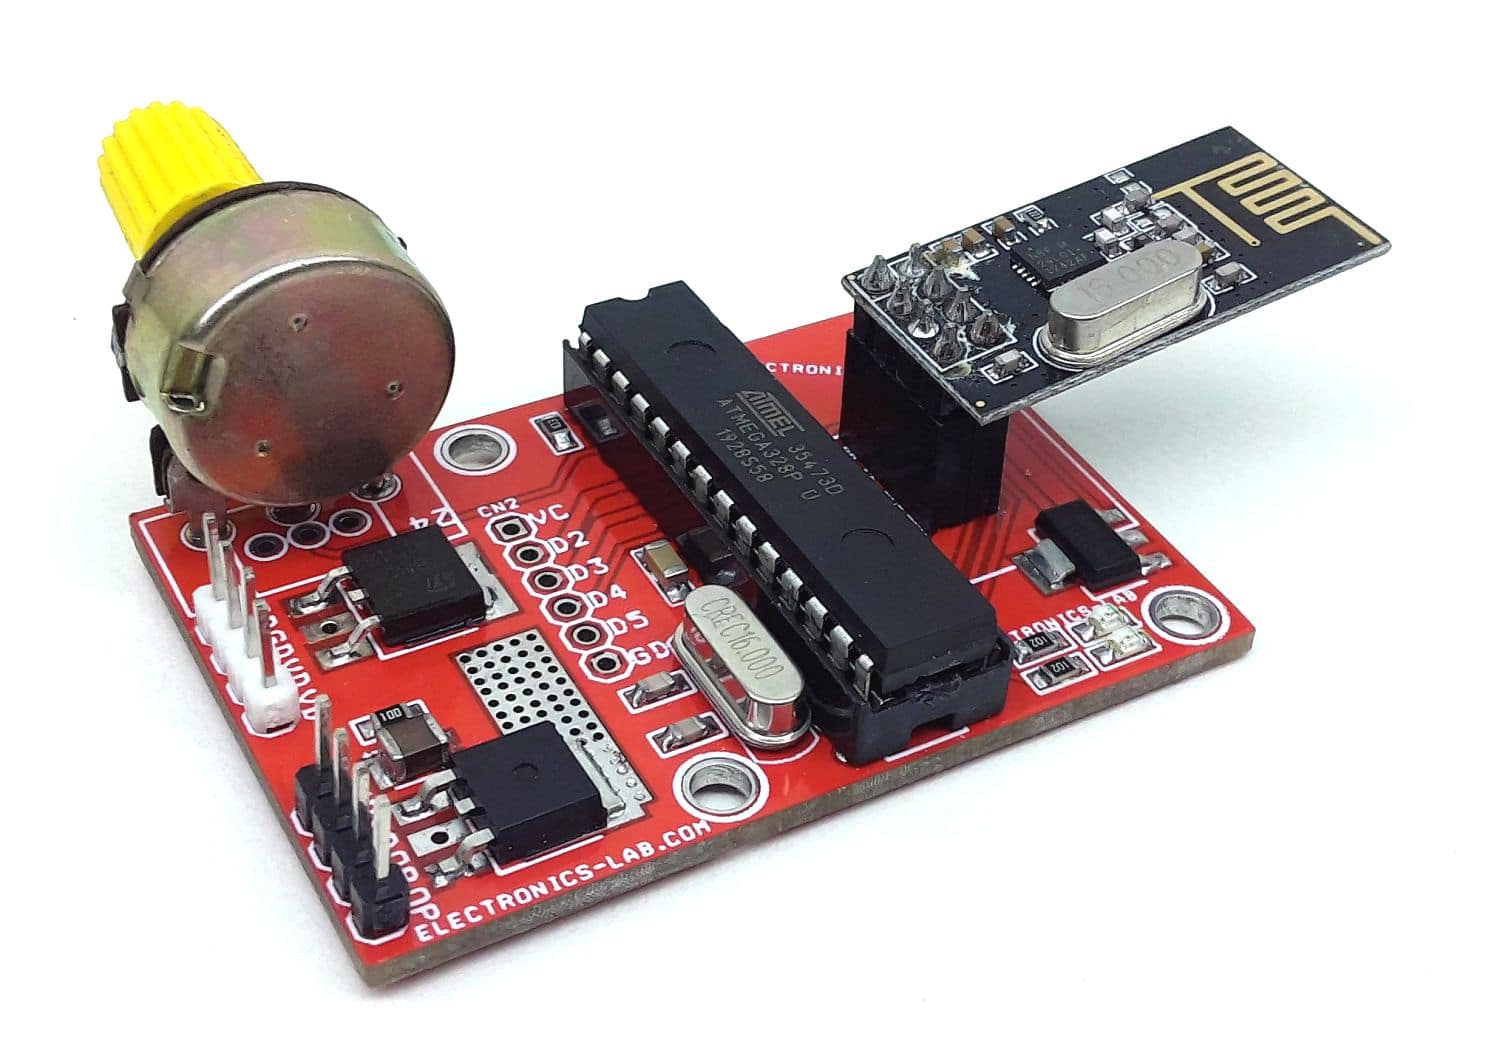 4-Channel Remote Receiver Using NRF24L01 Radio Module - Arduino